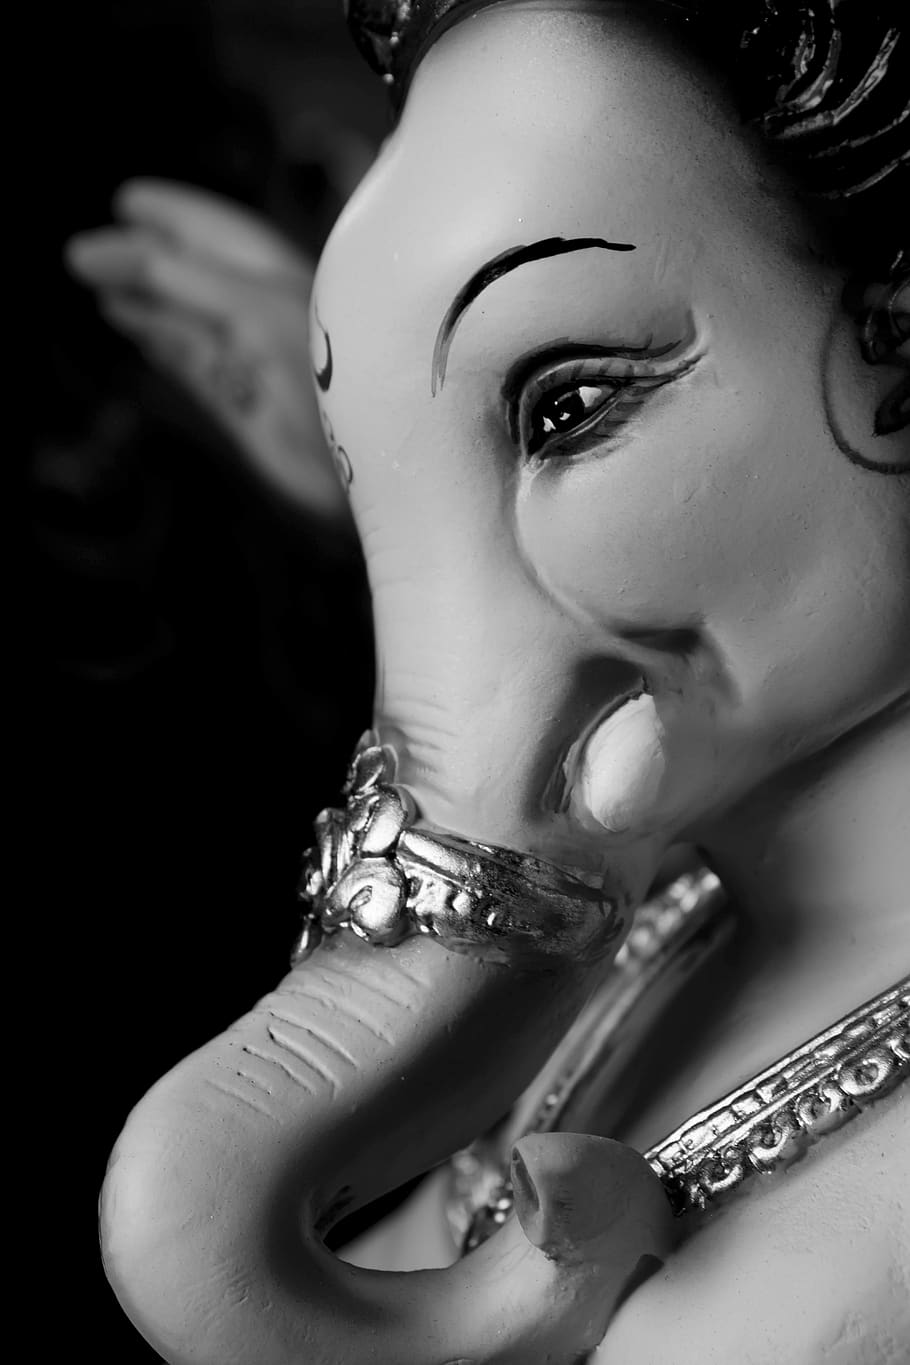 shree ganesh, ganpati bappa, statue, lord ganesha, one person, headshot, jewelry, indoors, portrait, close-up